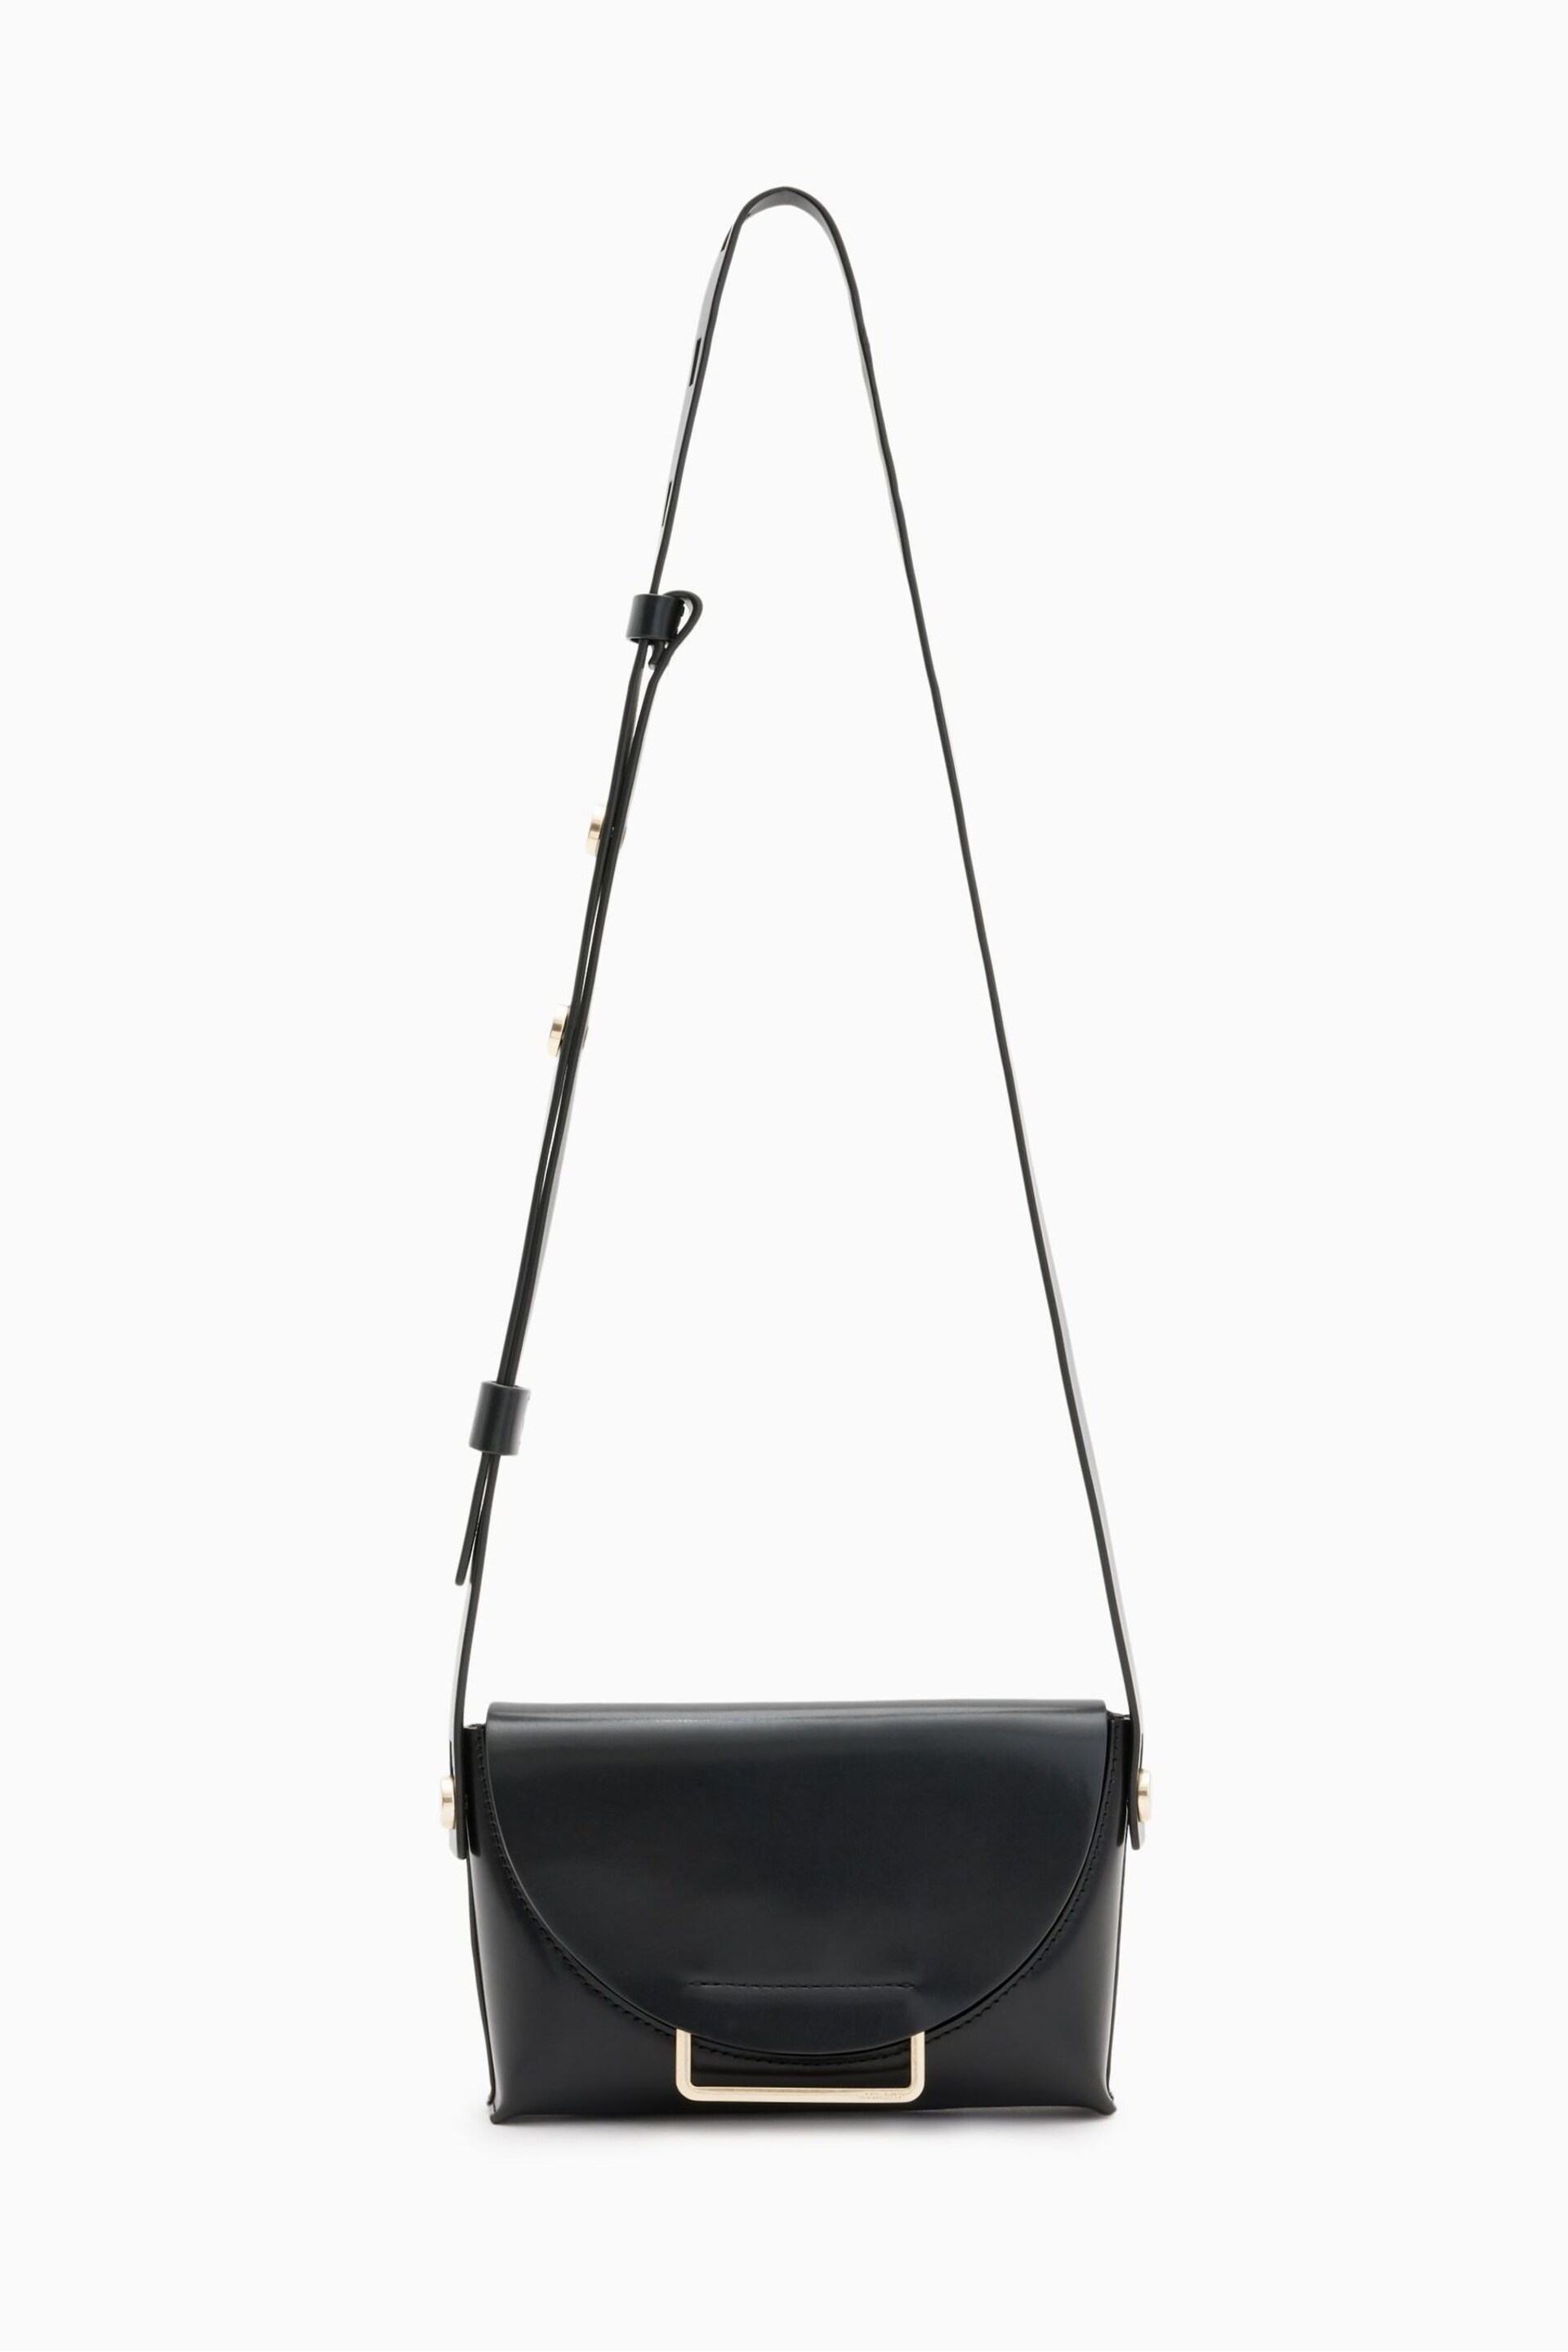 AllSaints Black Cross-Body Francine Bag - Image 3 of 8